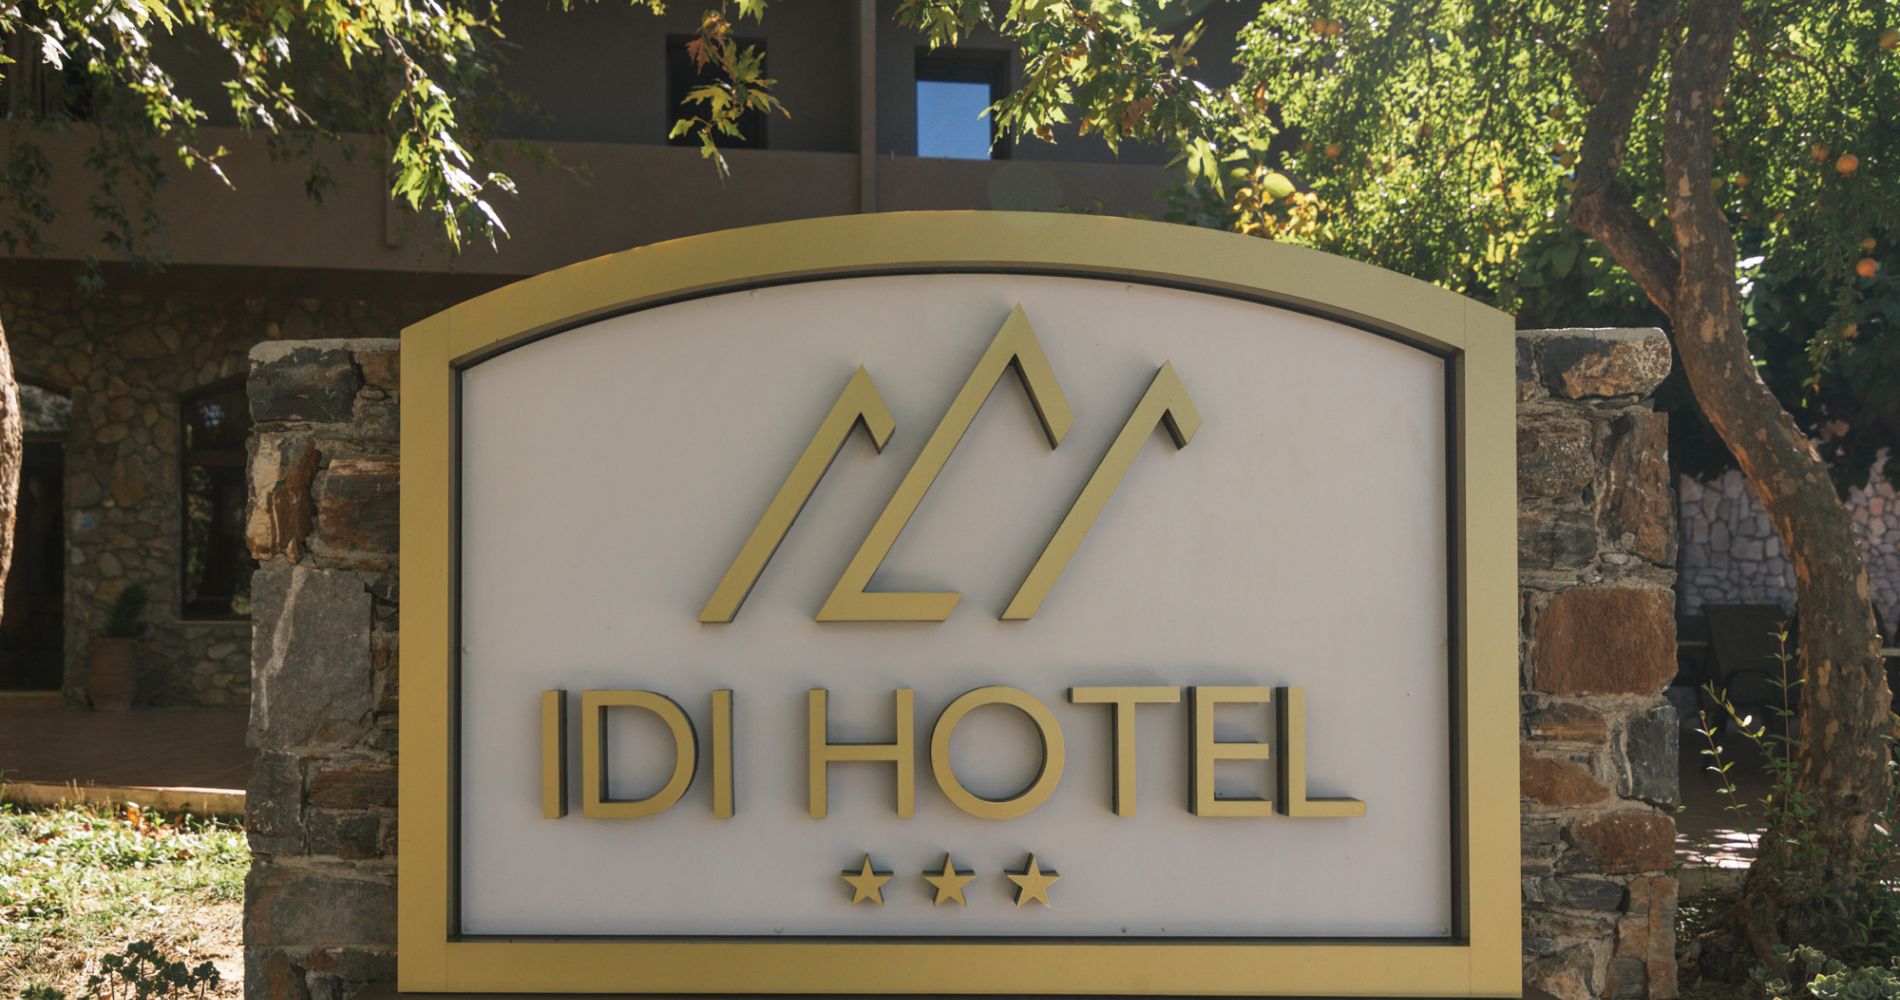 IDI HOTEL